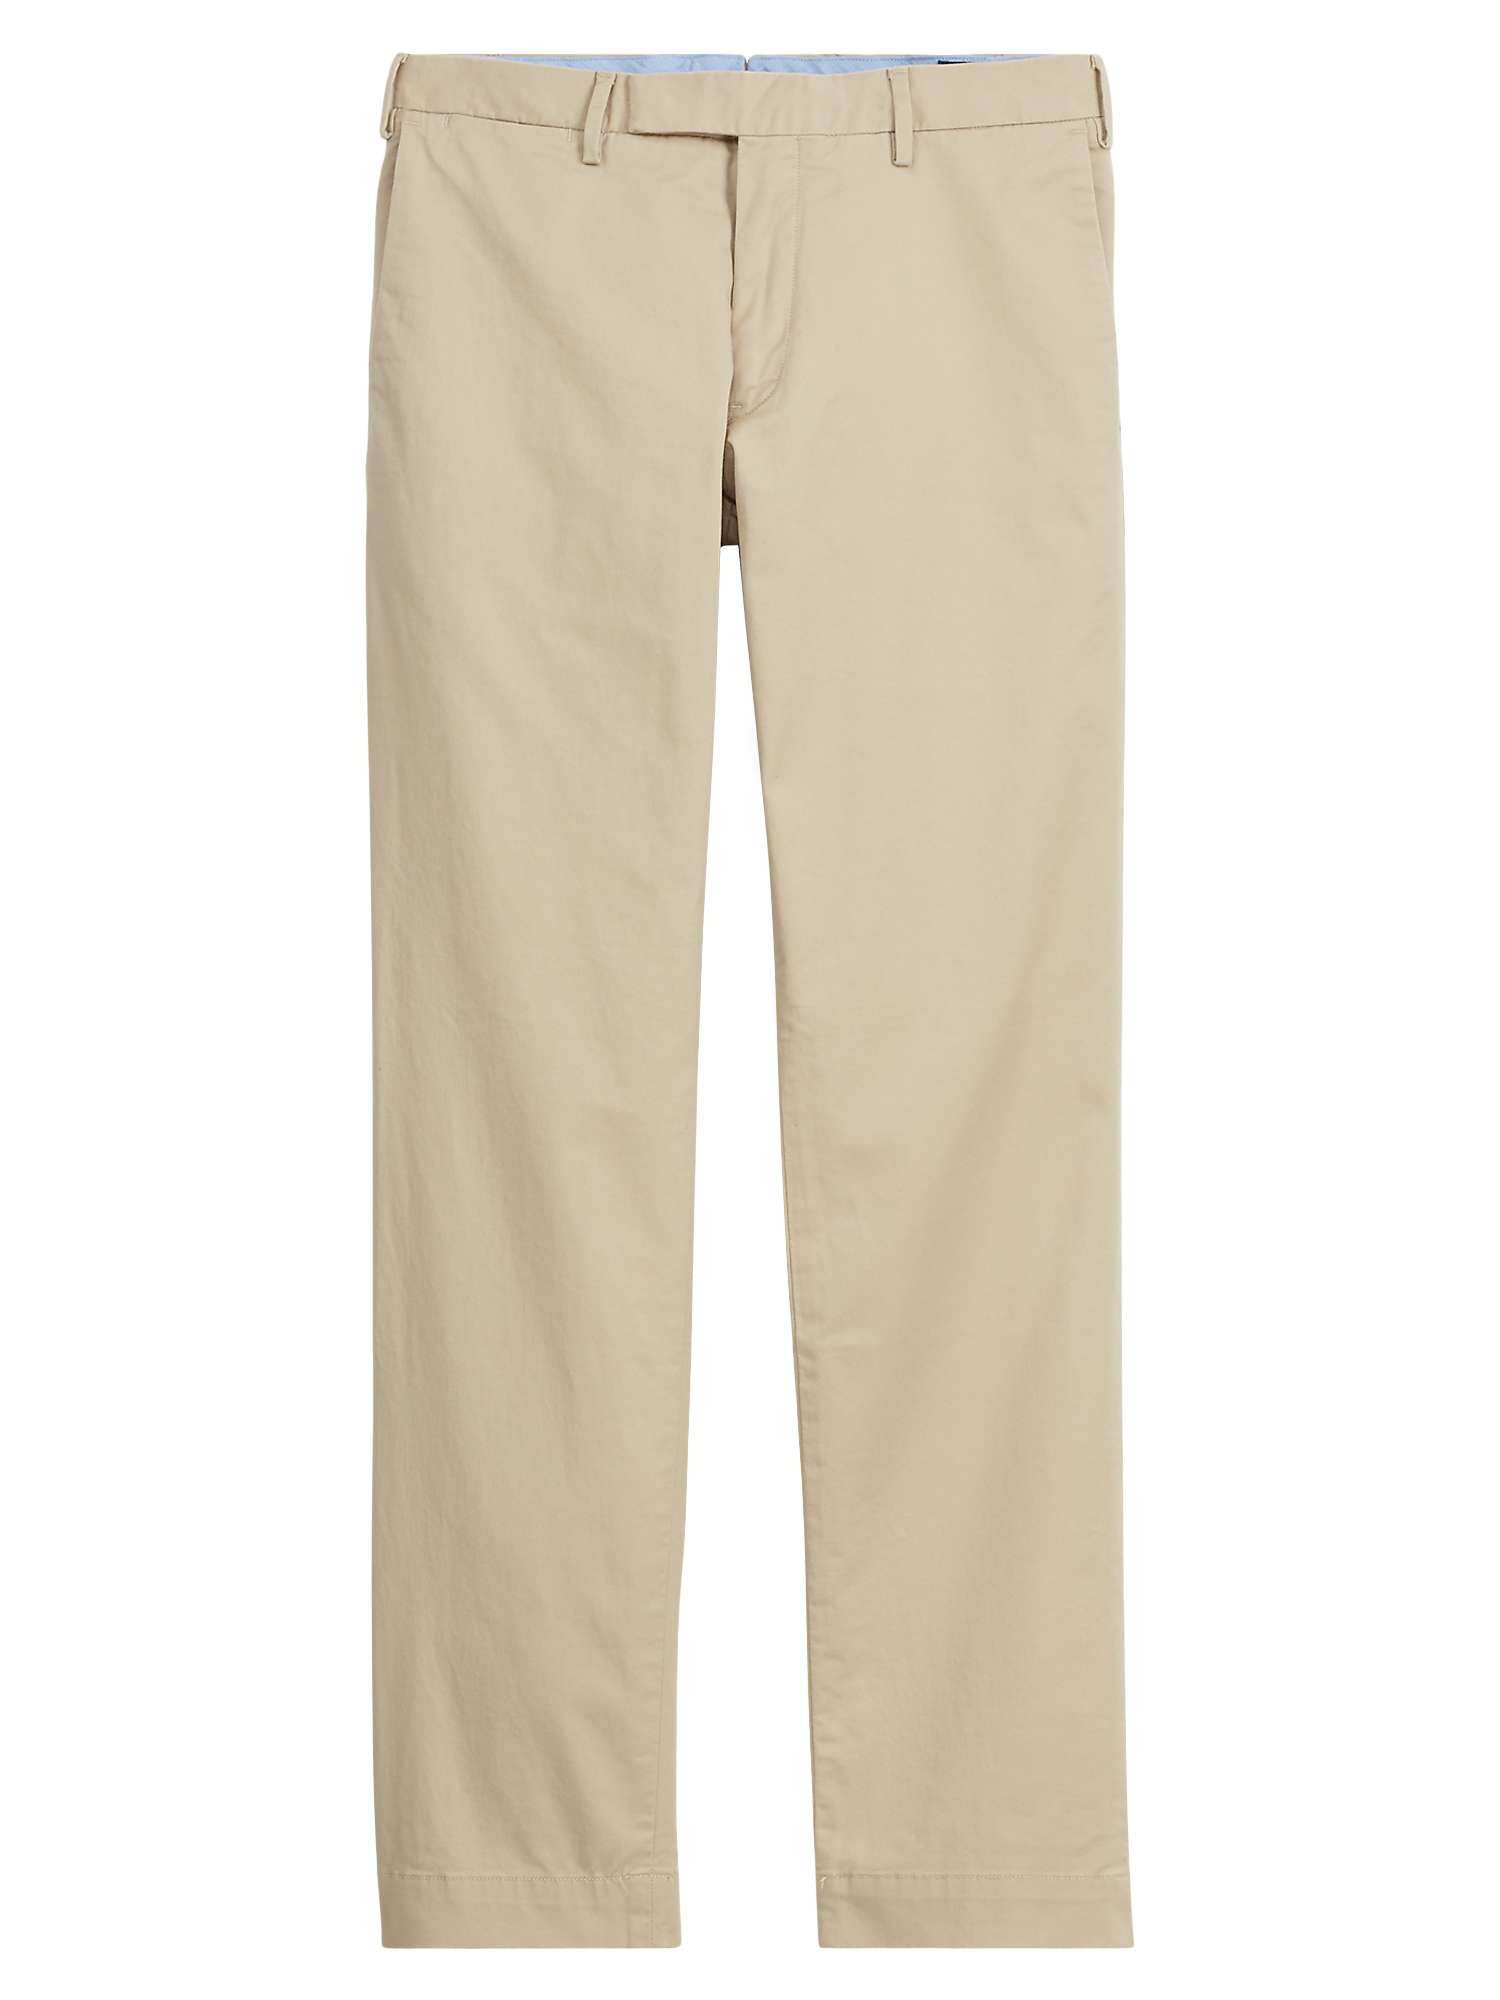 Buy Polo Ralph Lauren Hudson Slim Fit Stretch Cotton Trousers Online at johnlewis.com